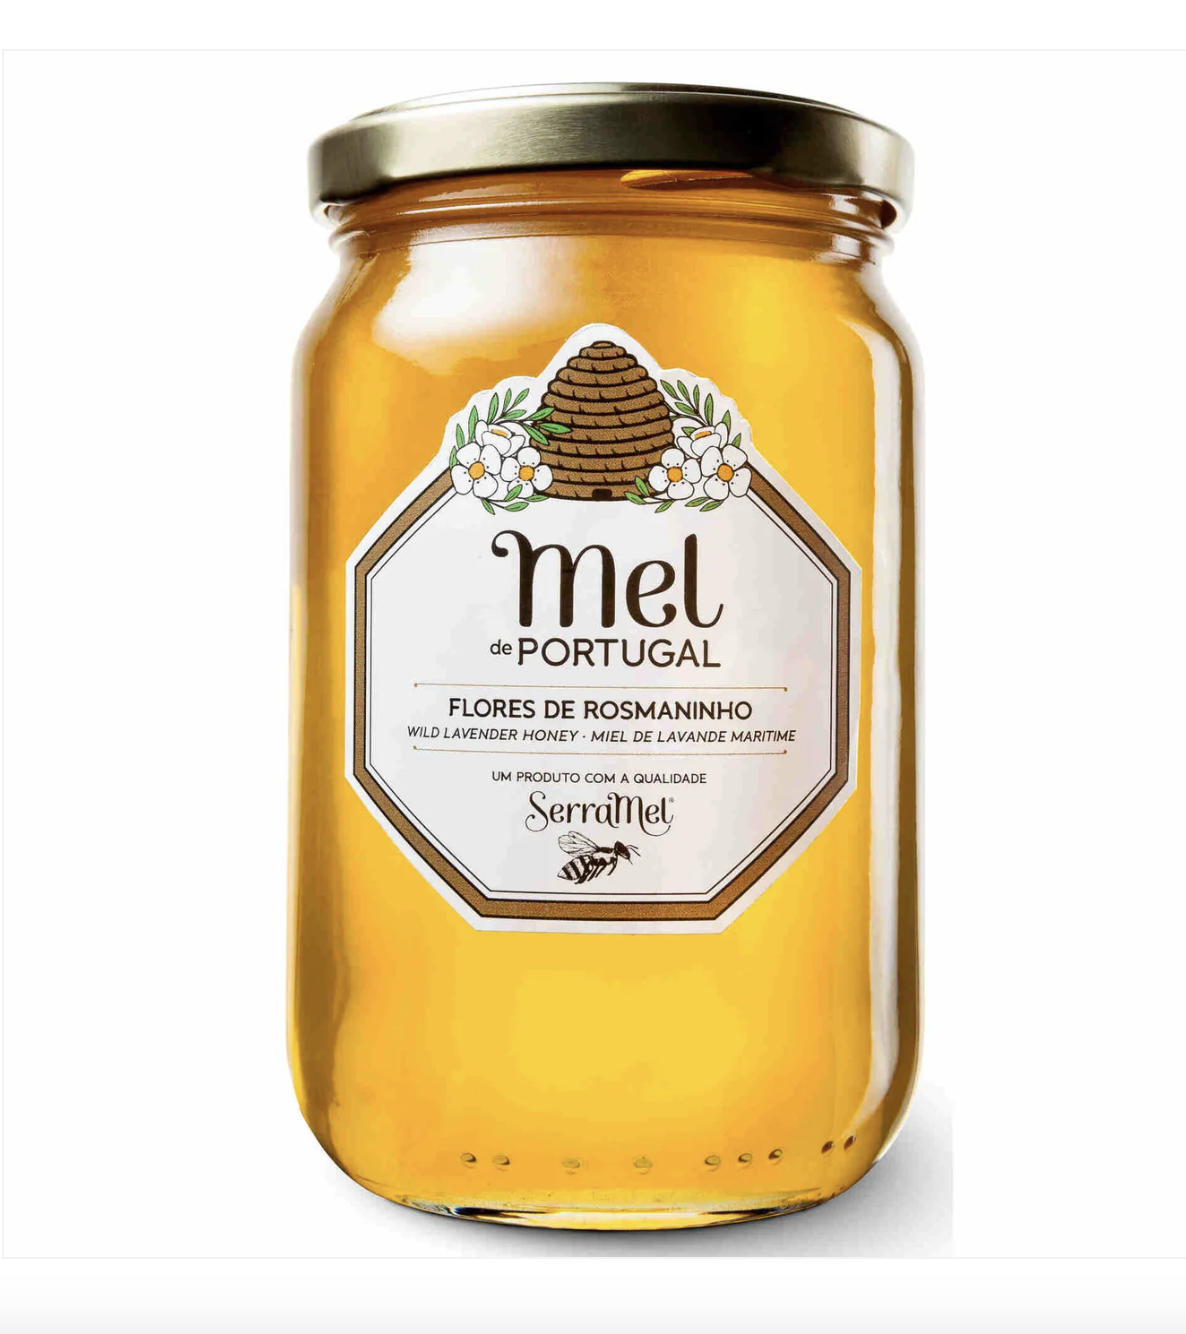 Pure Honey from Portugal - Wild Lavender Honey - 17.6 oz